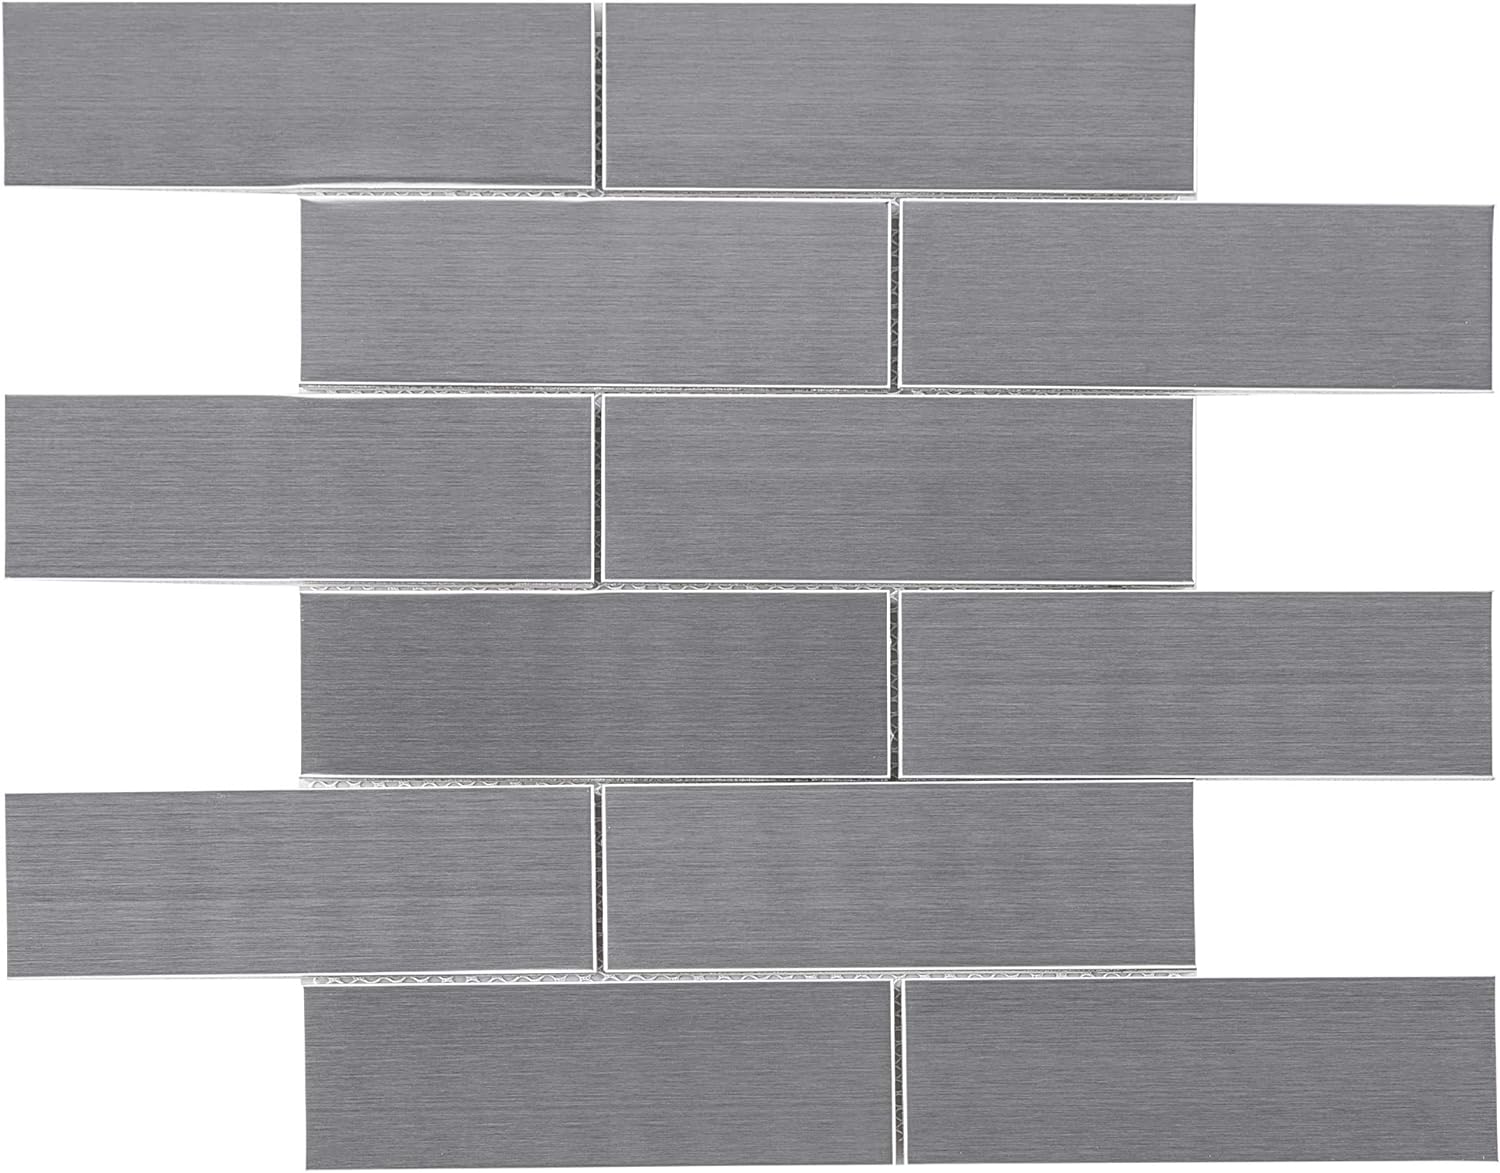 TSSLG-02 2" x 6" Stainless Steel Brick Subway Metal Mosaic Wall Tile Backsplash in Silver